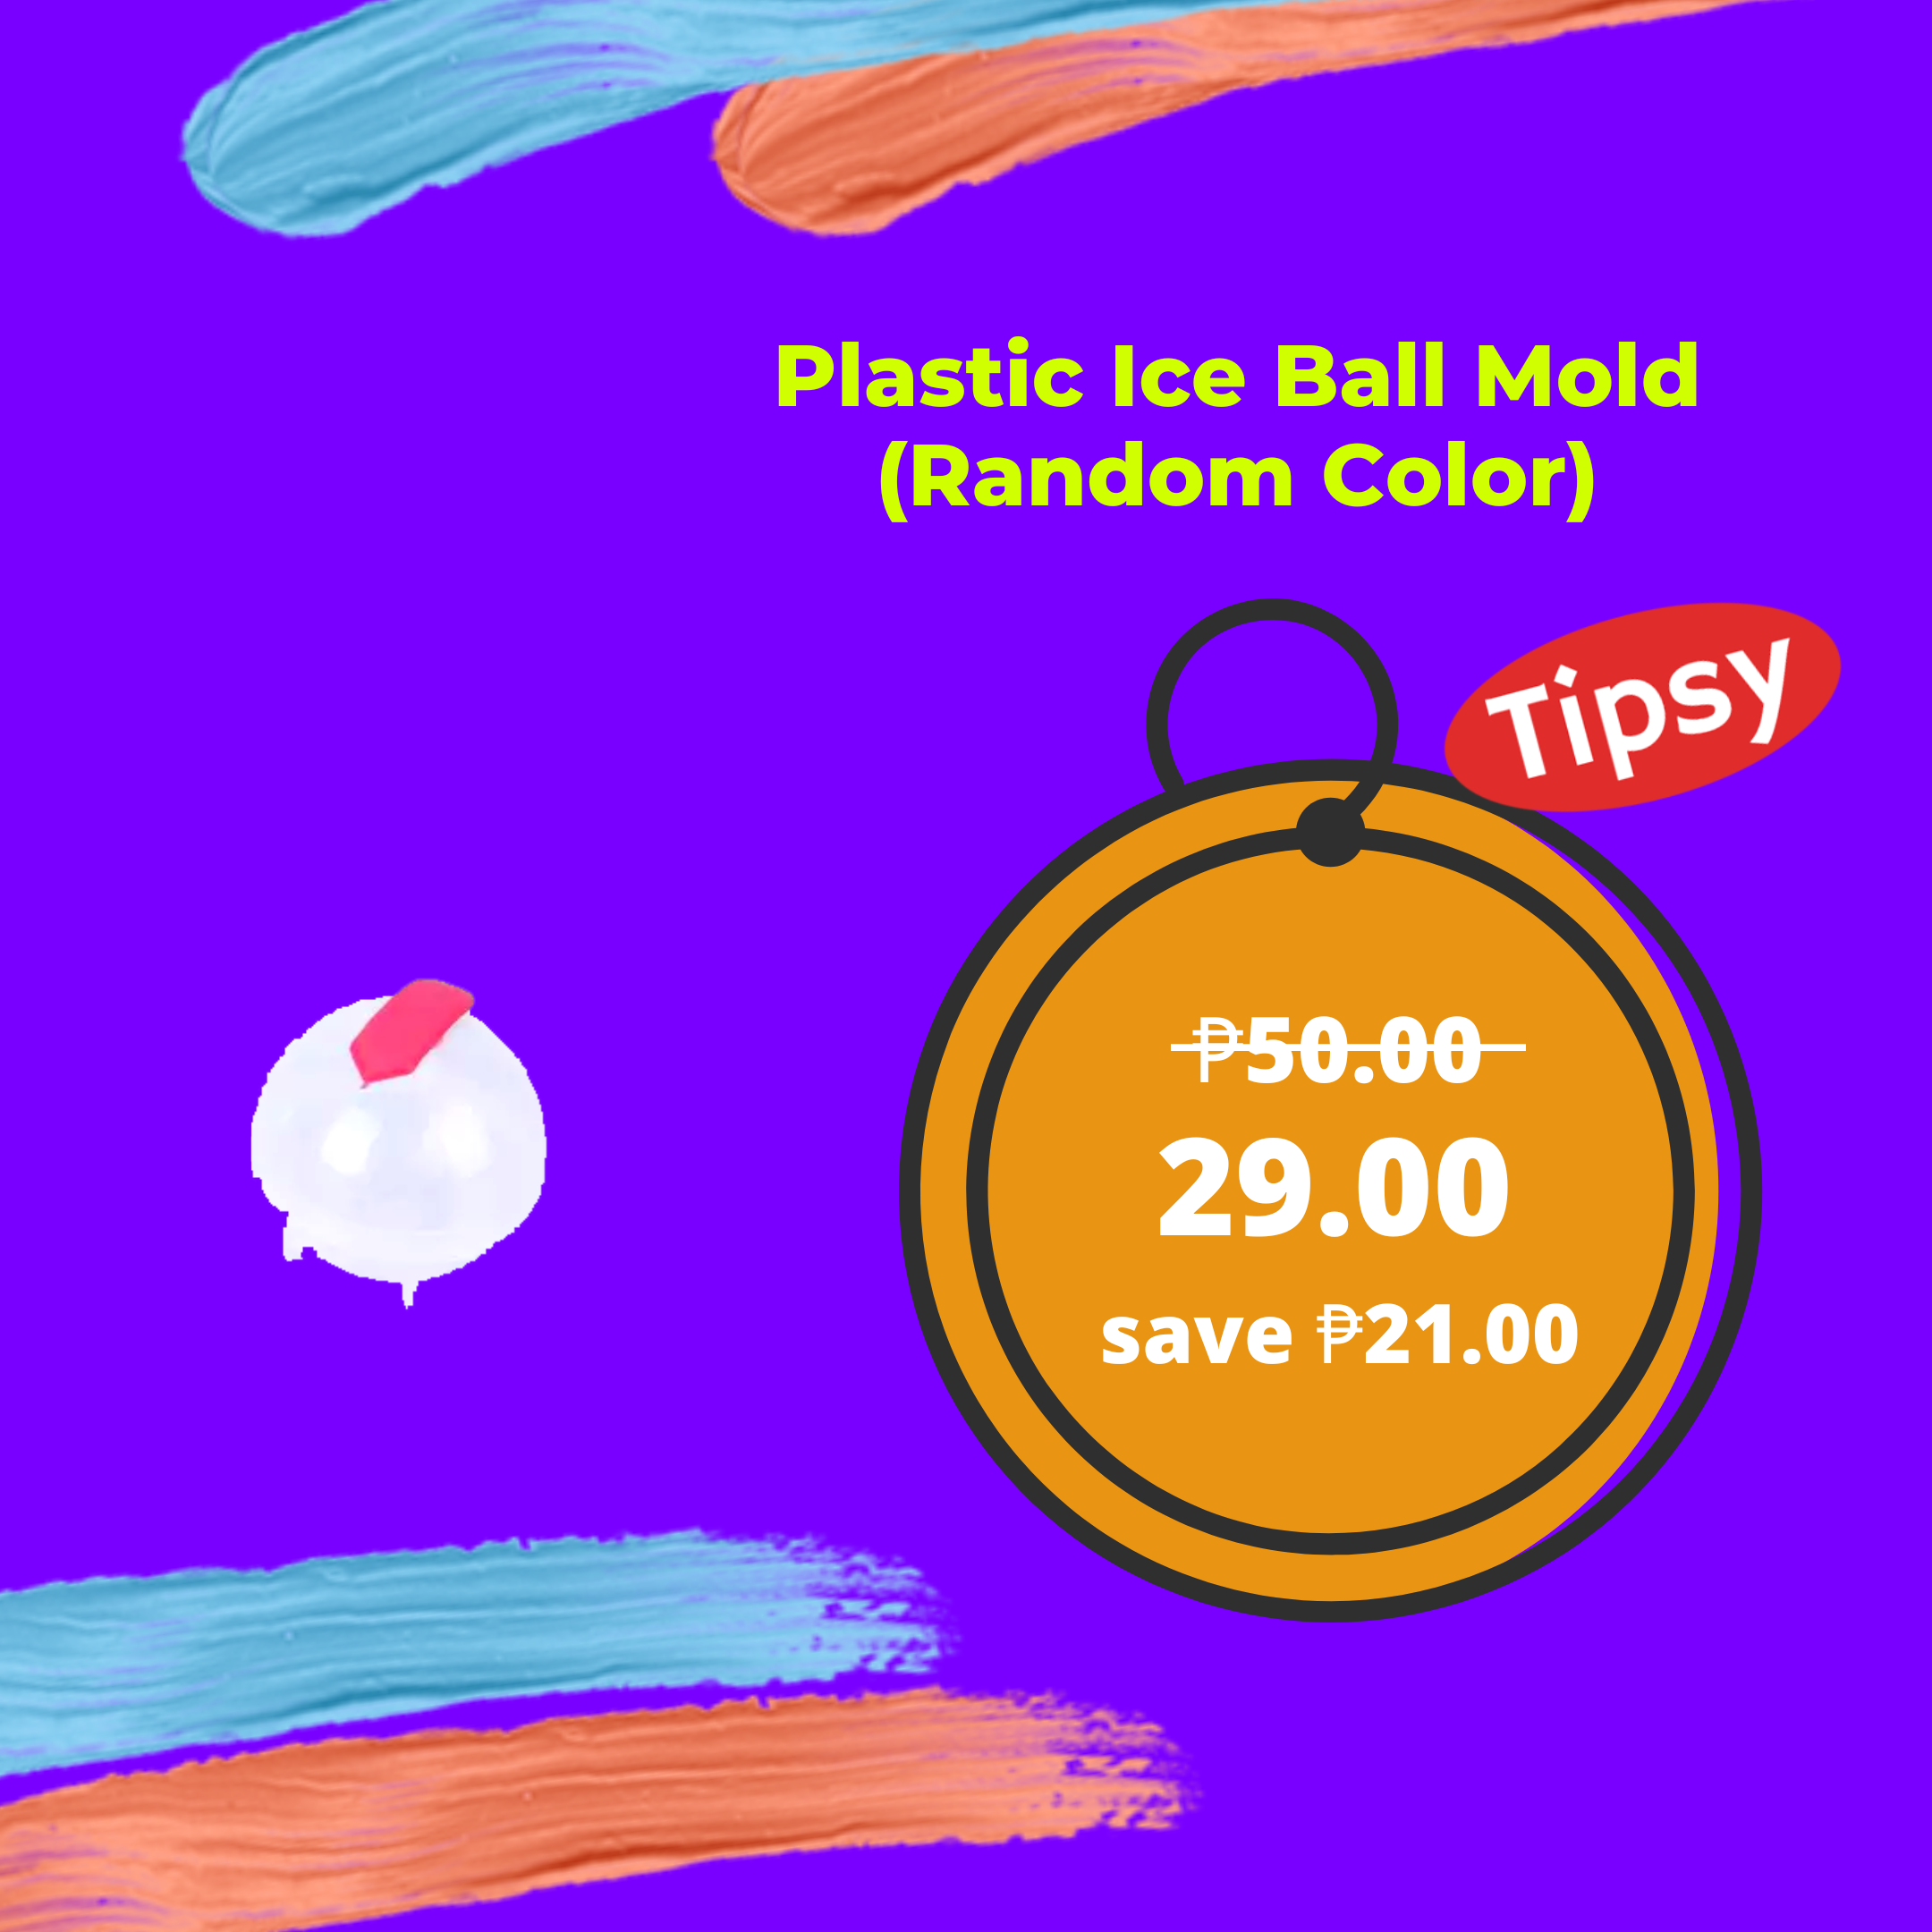 Plastic Ice Ball Mold (Random Color)